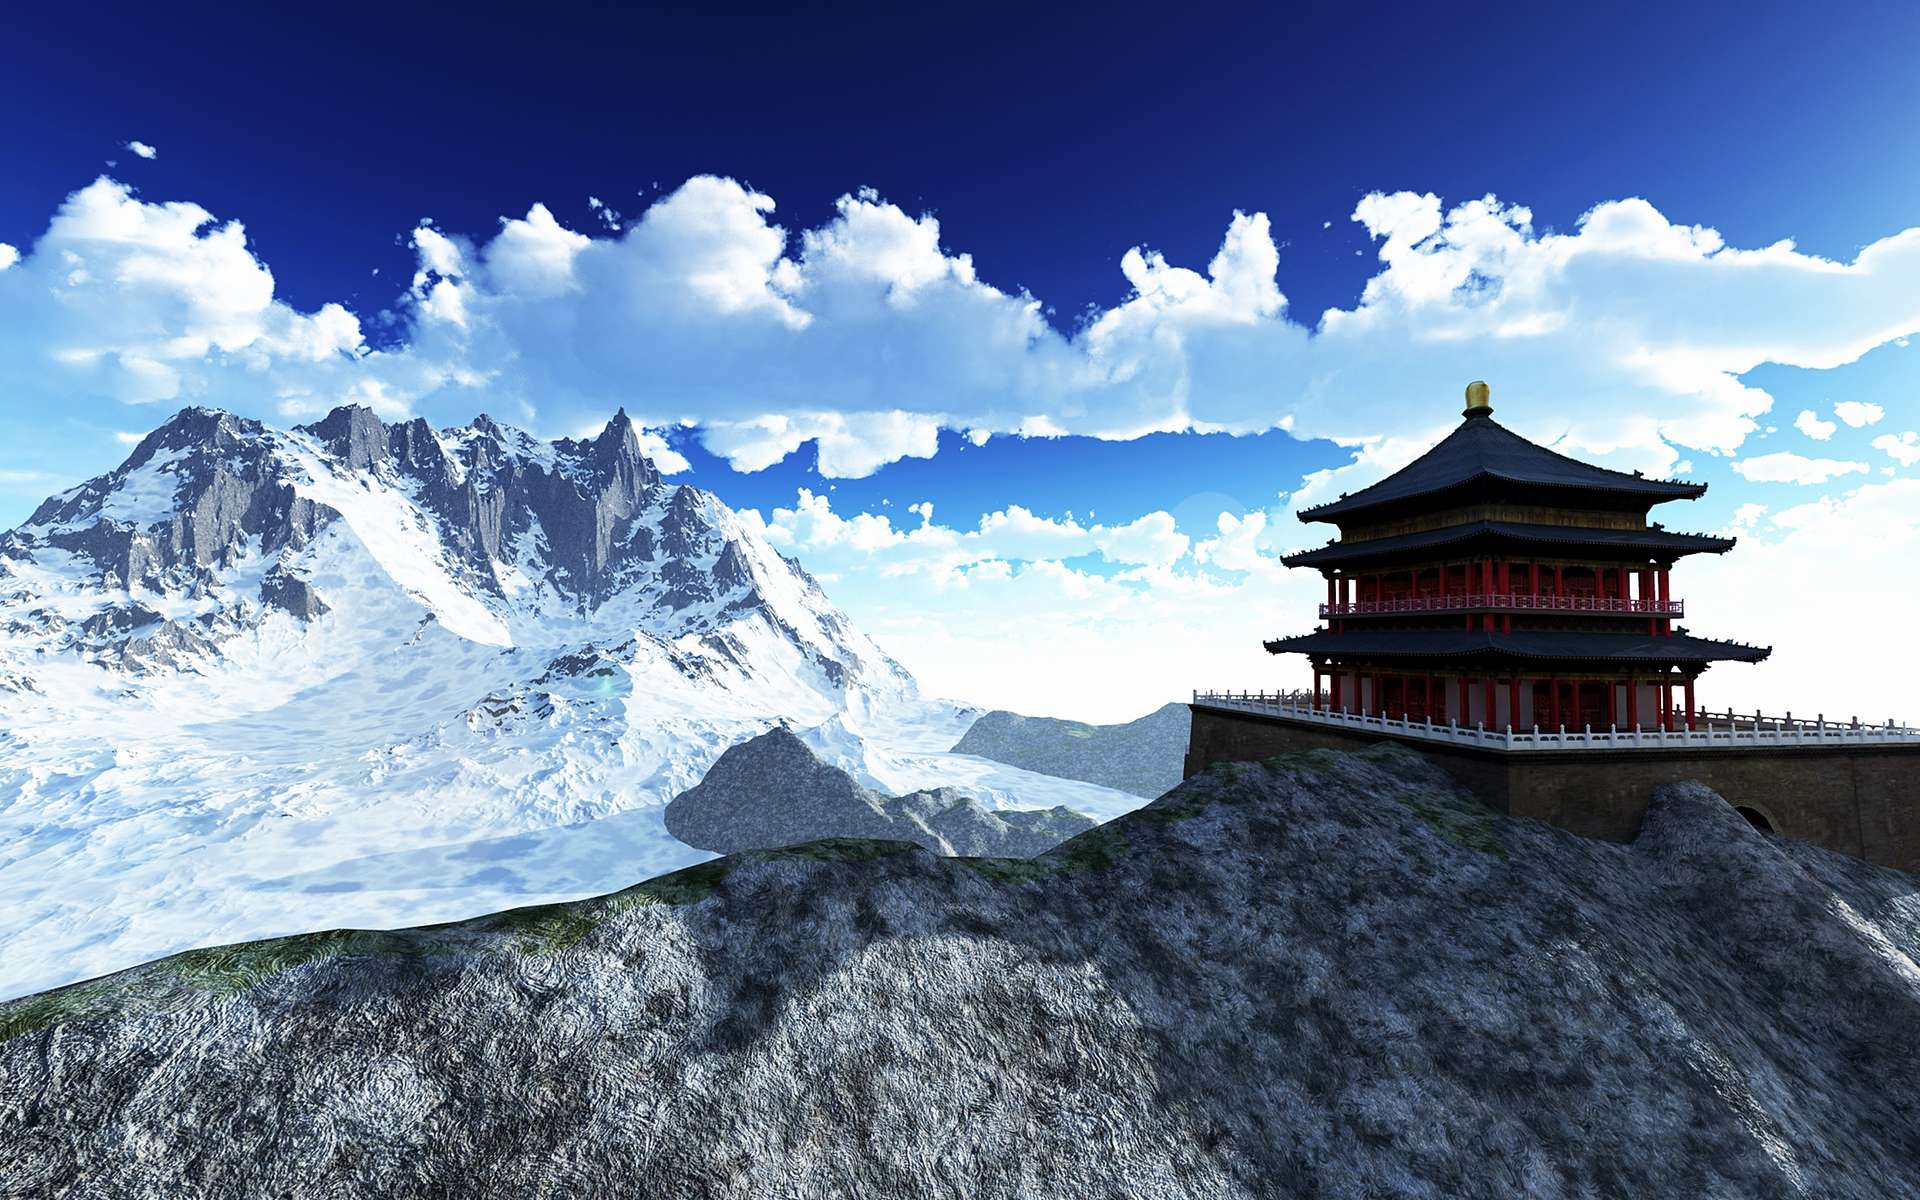 Comment s'est formé l'Himalaya ? © satori, Adobe Stock